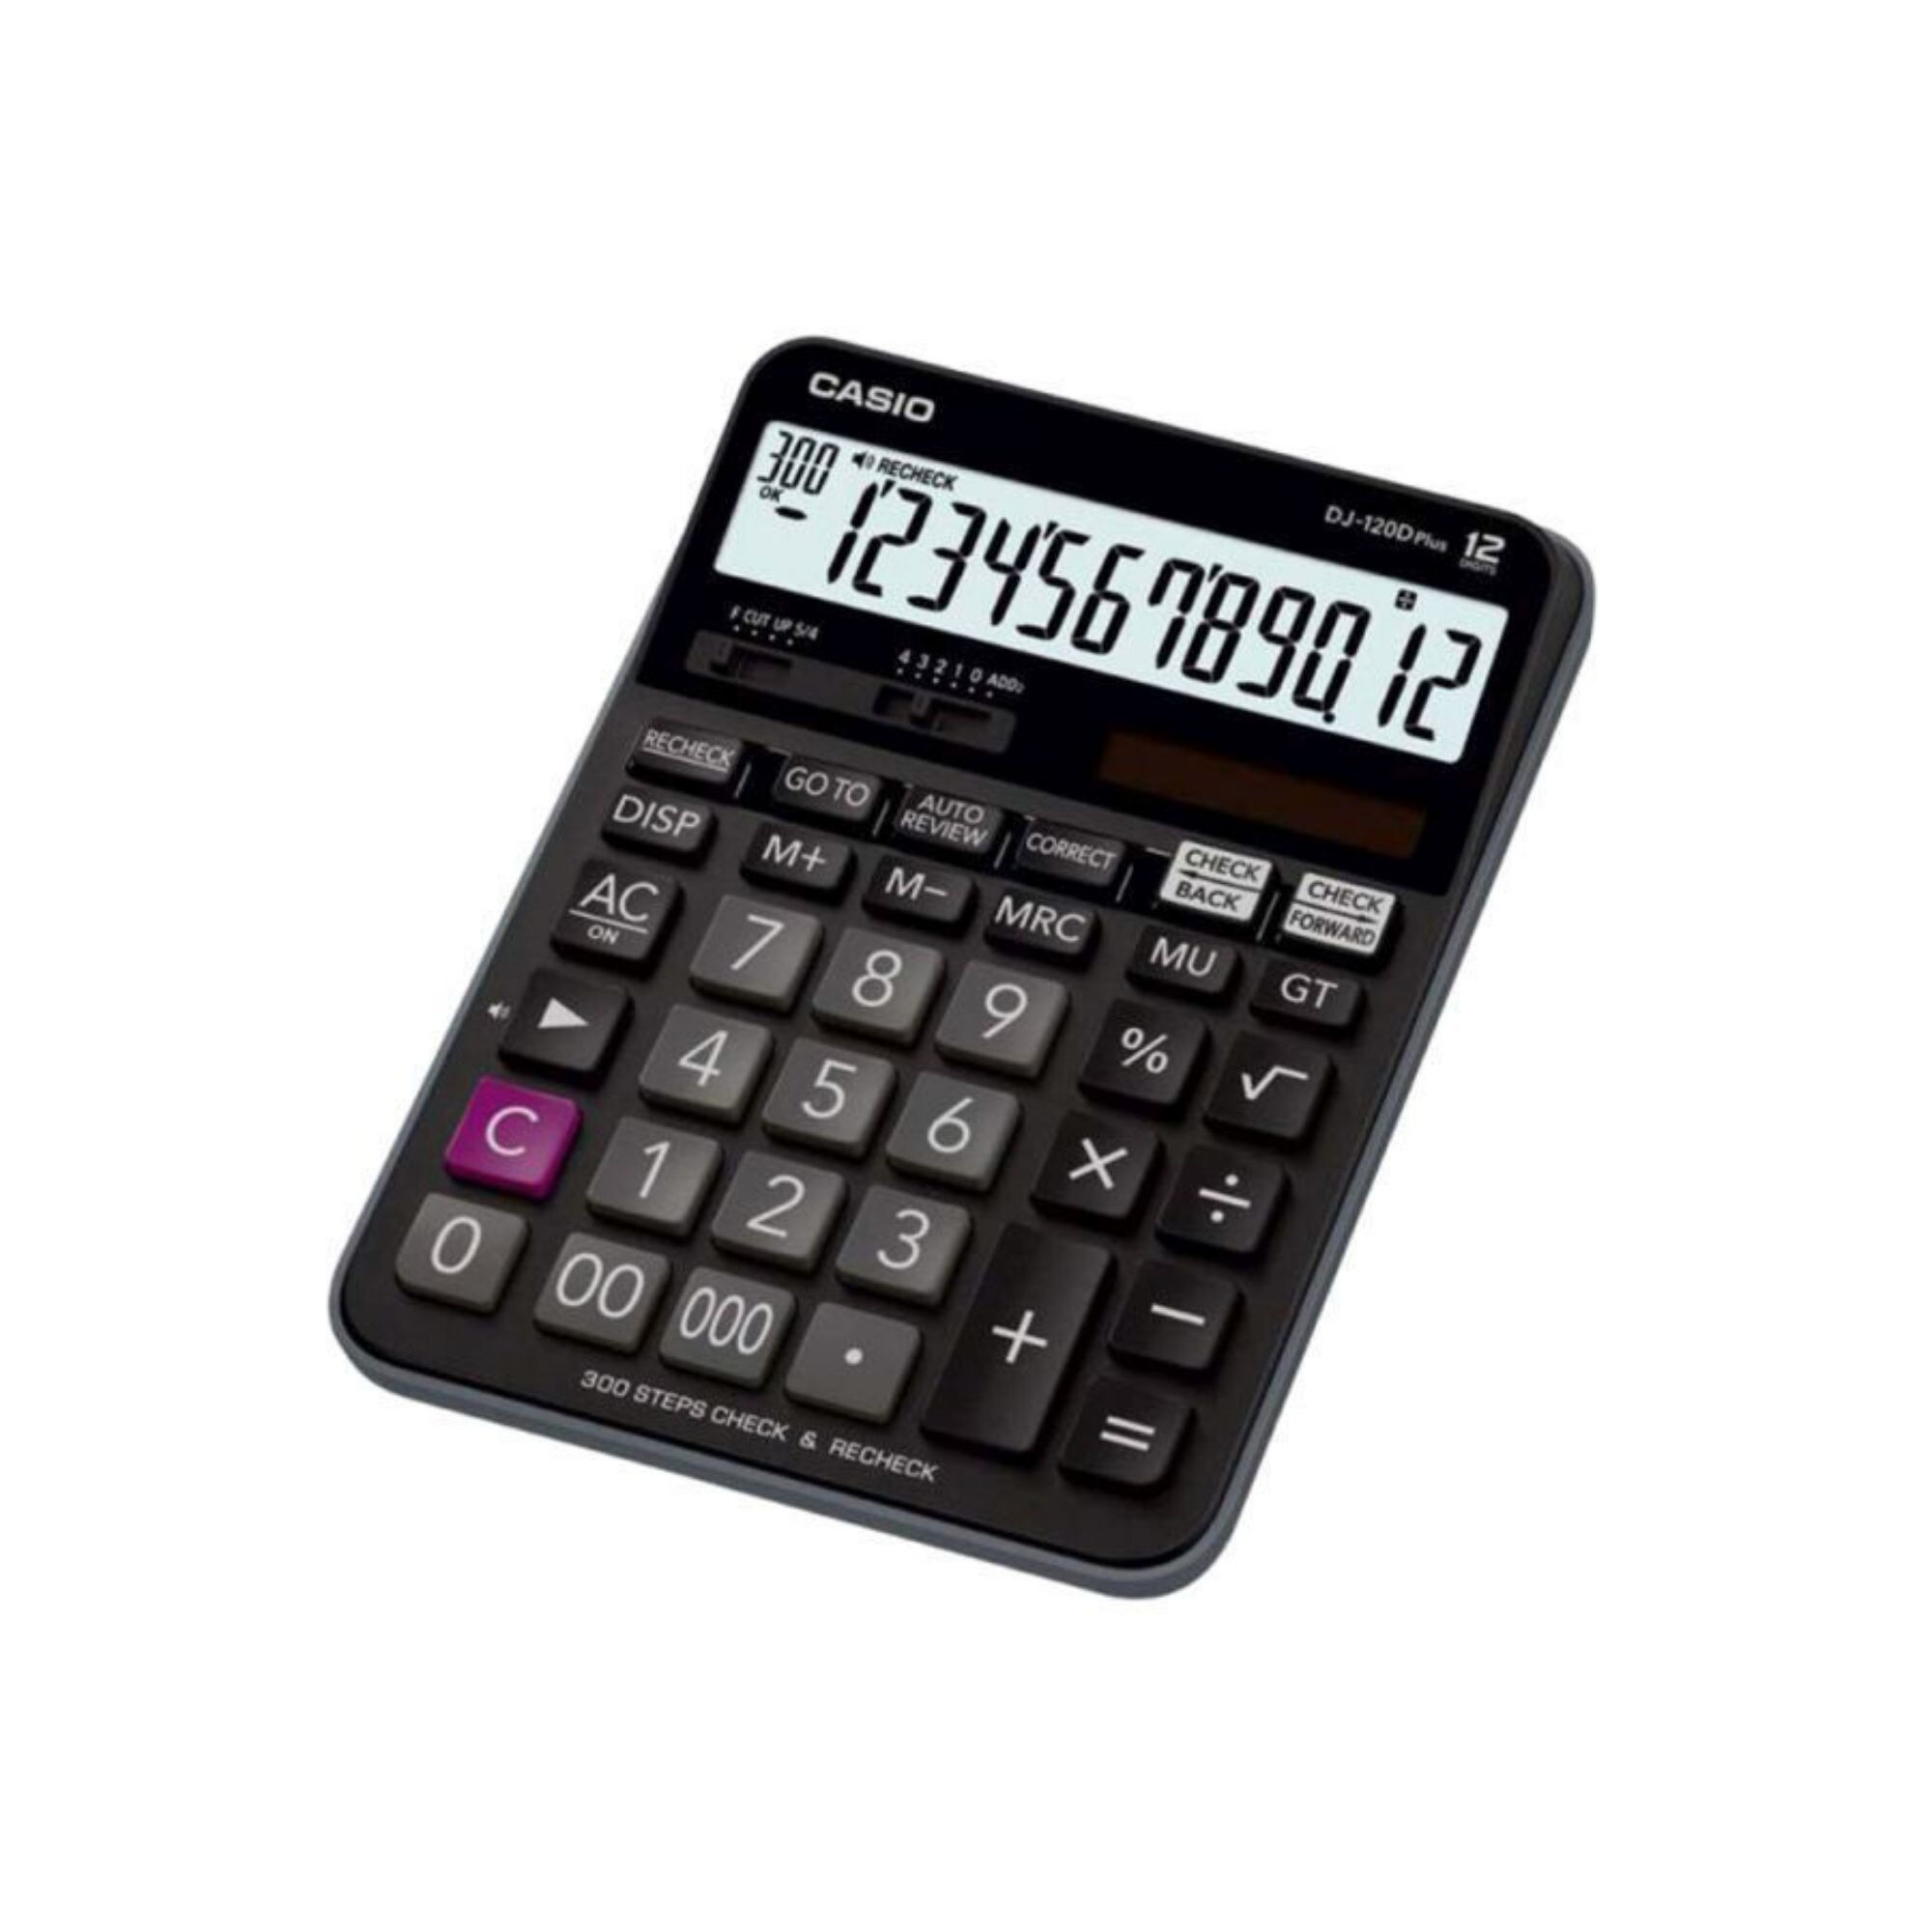 Casio Calculator Dj120D Plus, Black and Gray